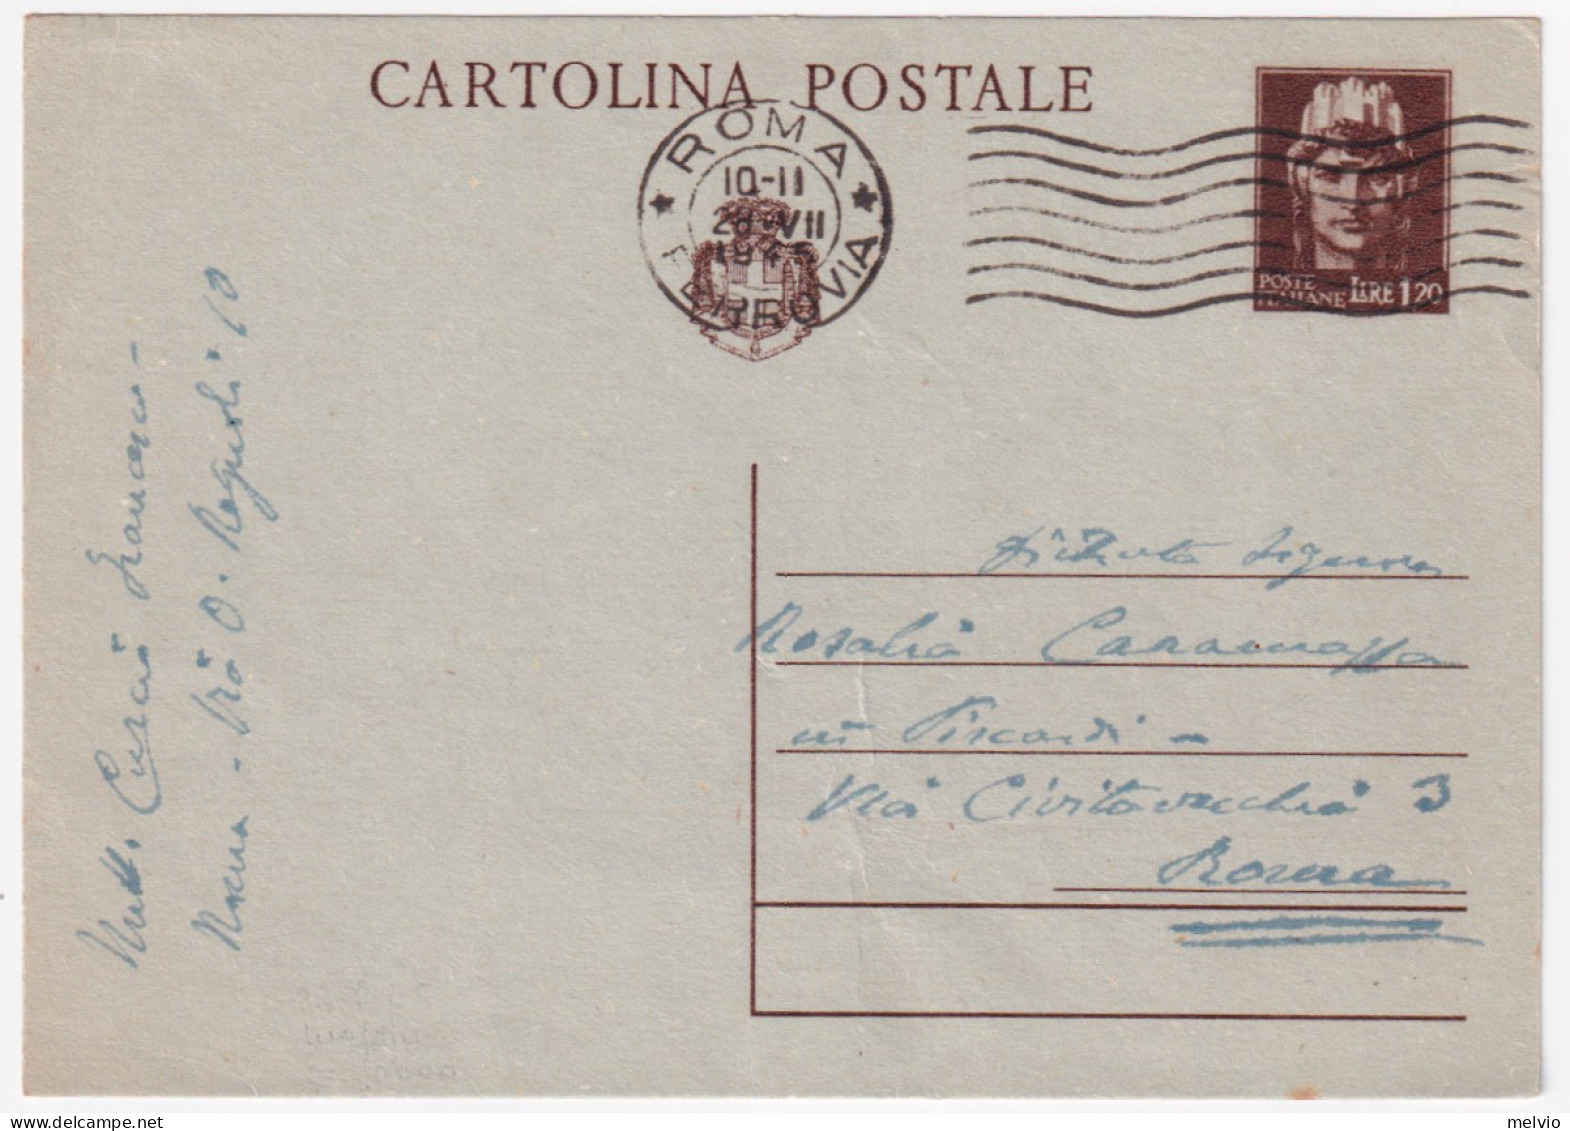 1945-Cartolina Postale Lire 1,20 Roma (28.7) - Marcophilie